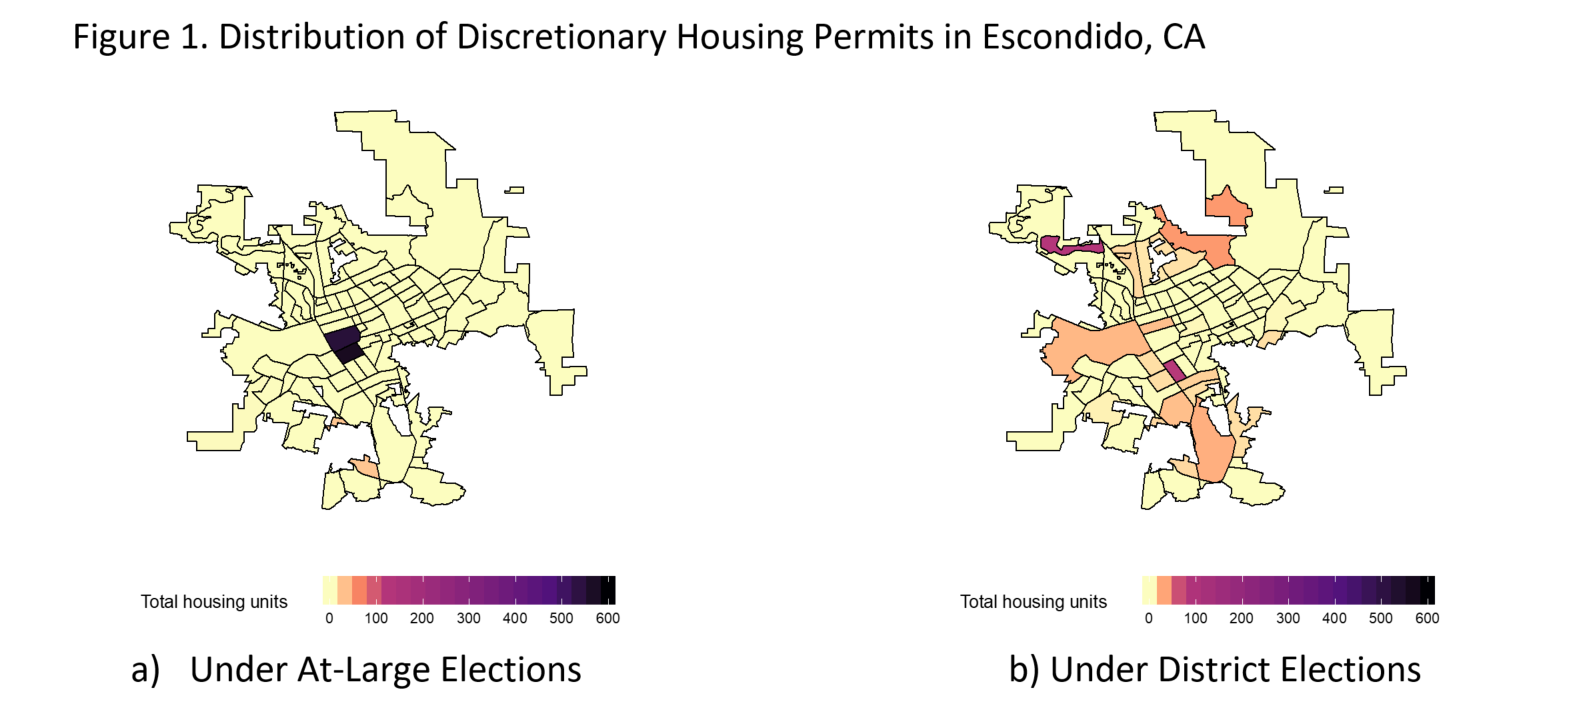 Distribution of Discretionary Housing Permits in Escondido, CA